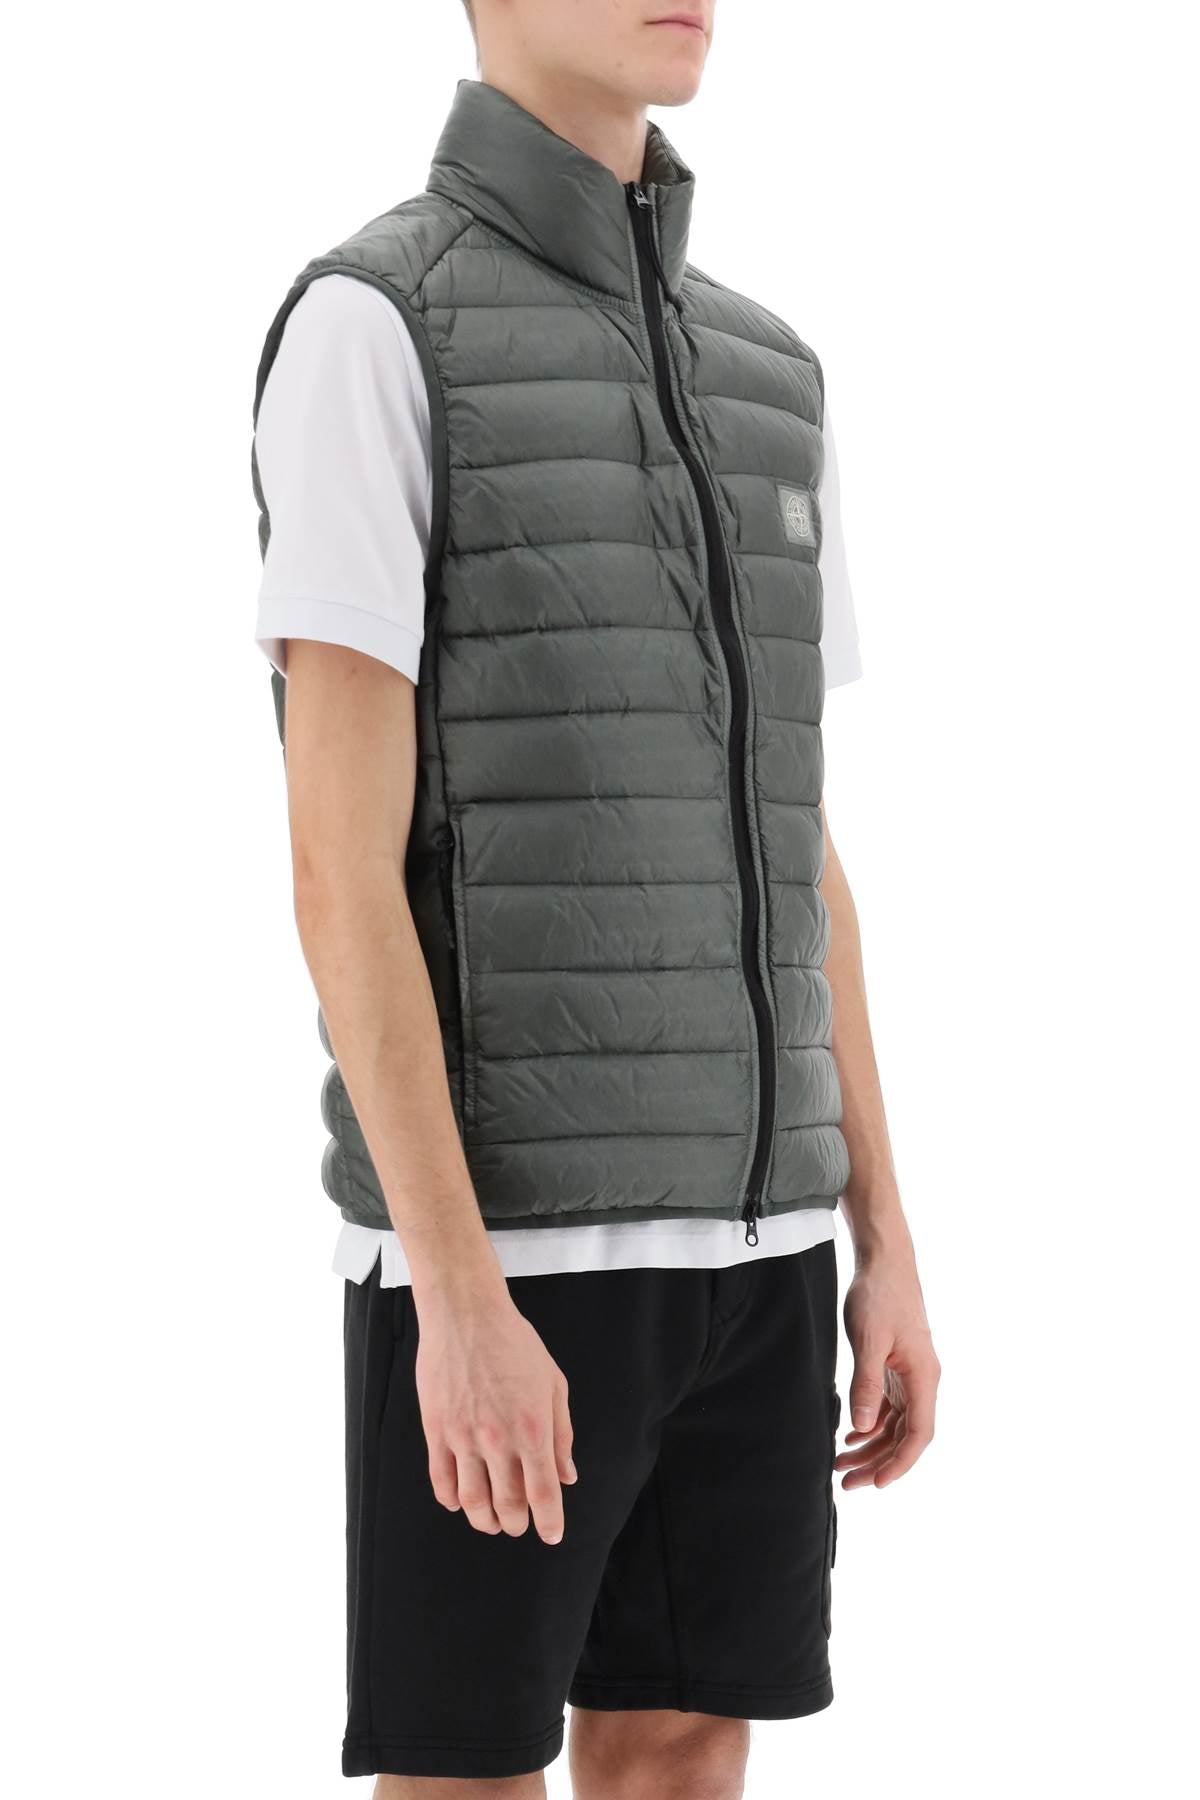 Stone Island Stone island lightweight puffer vest in r-nylon down-tc